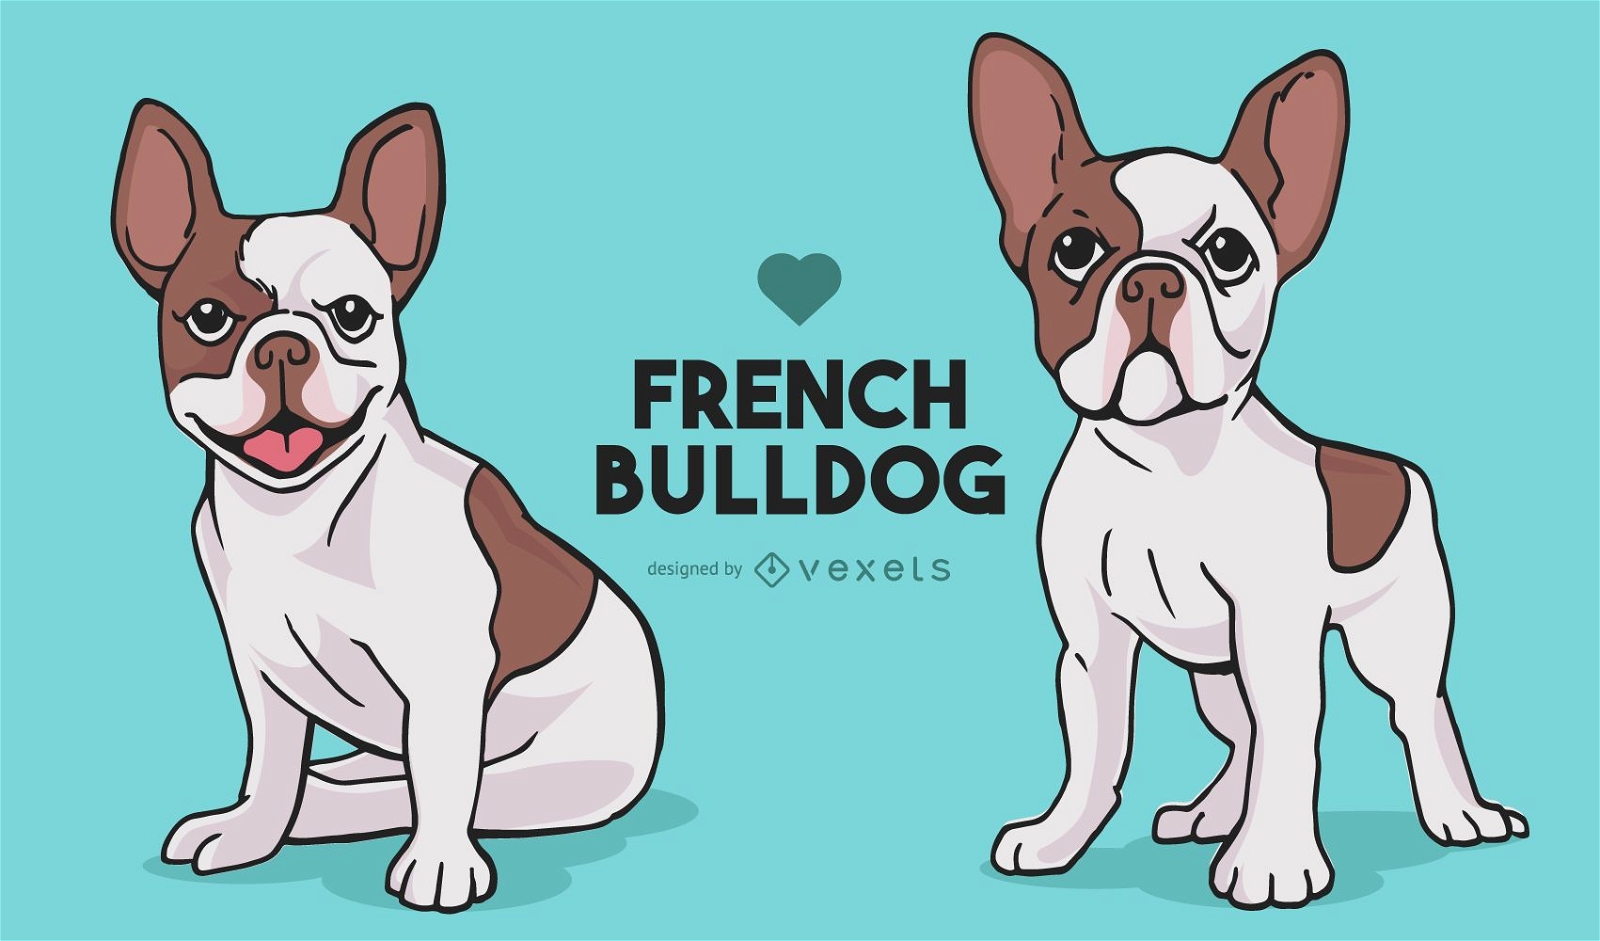 Dibujos animados de perros bulldog franc?s